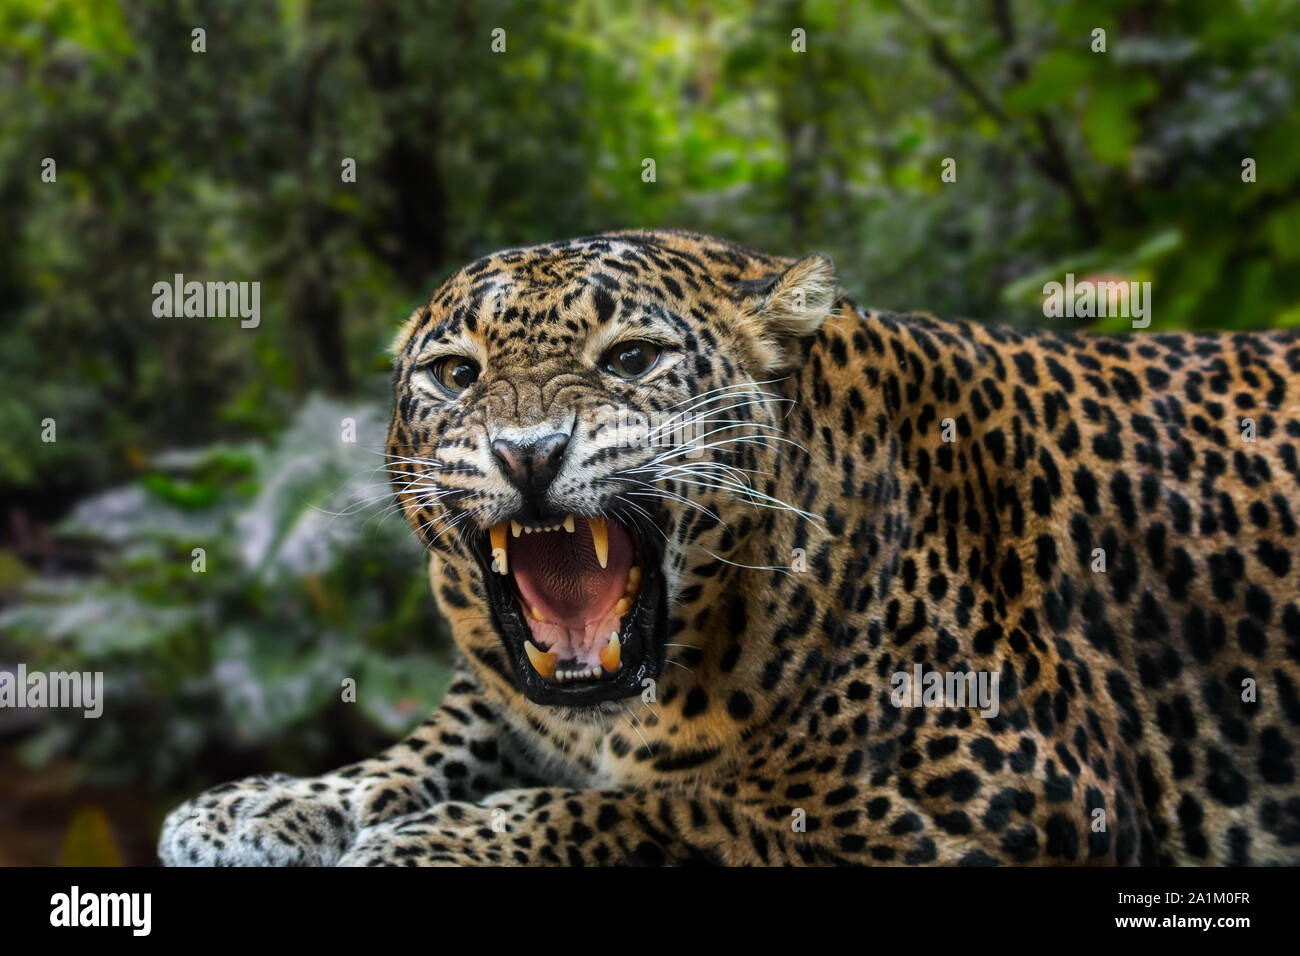 Sri Lankan leopard (Panthera pardus kotiya) roaring and showing large canine teeth in open mouth, native to Sri Lanka Stock Photo